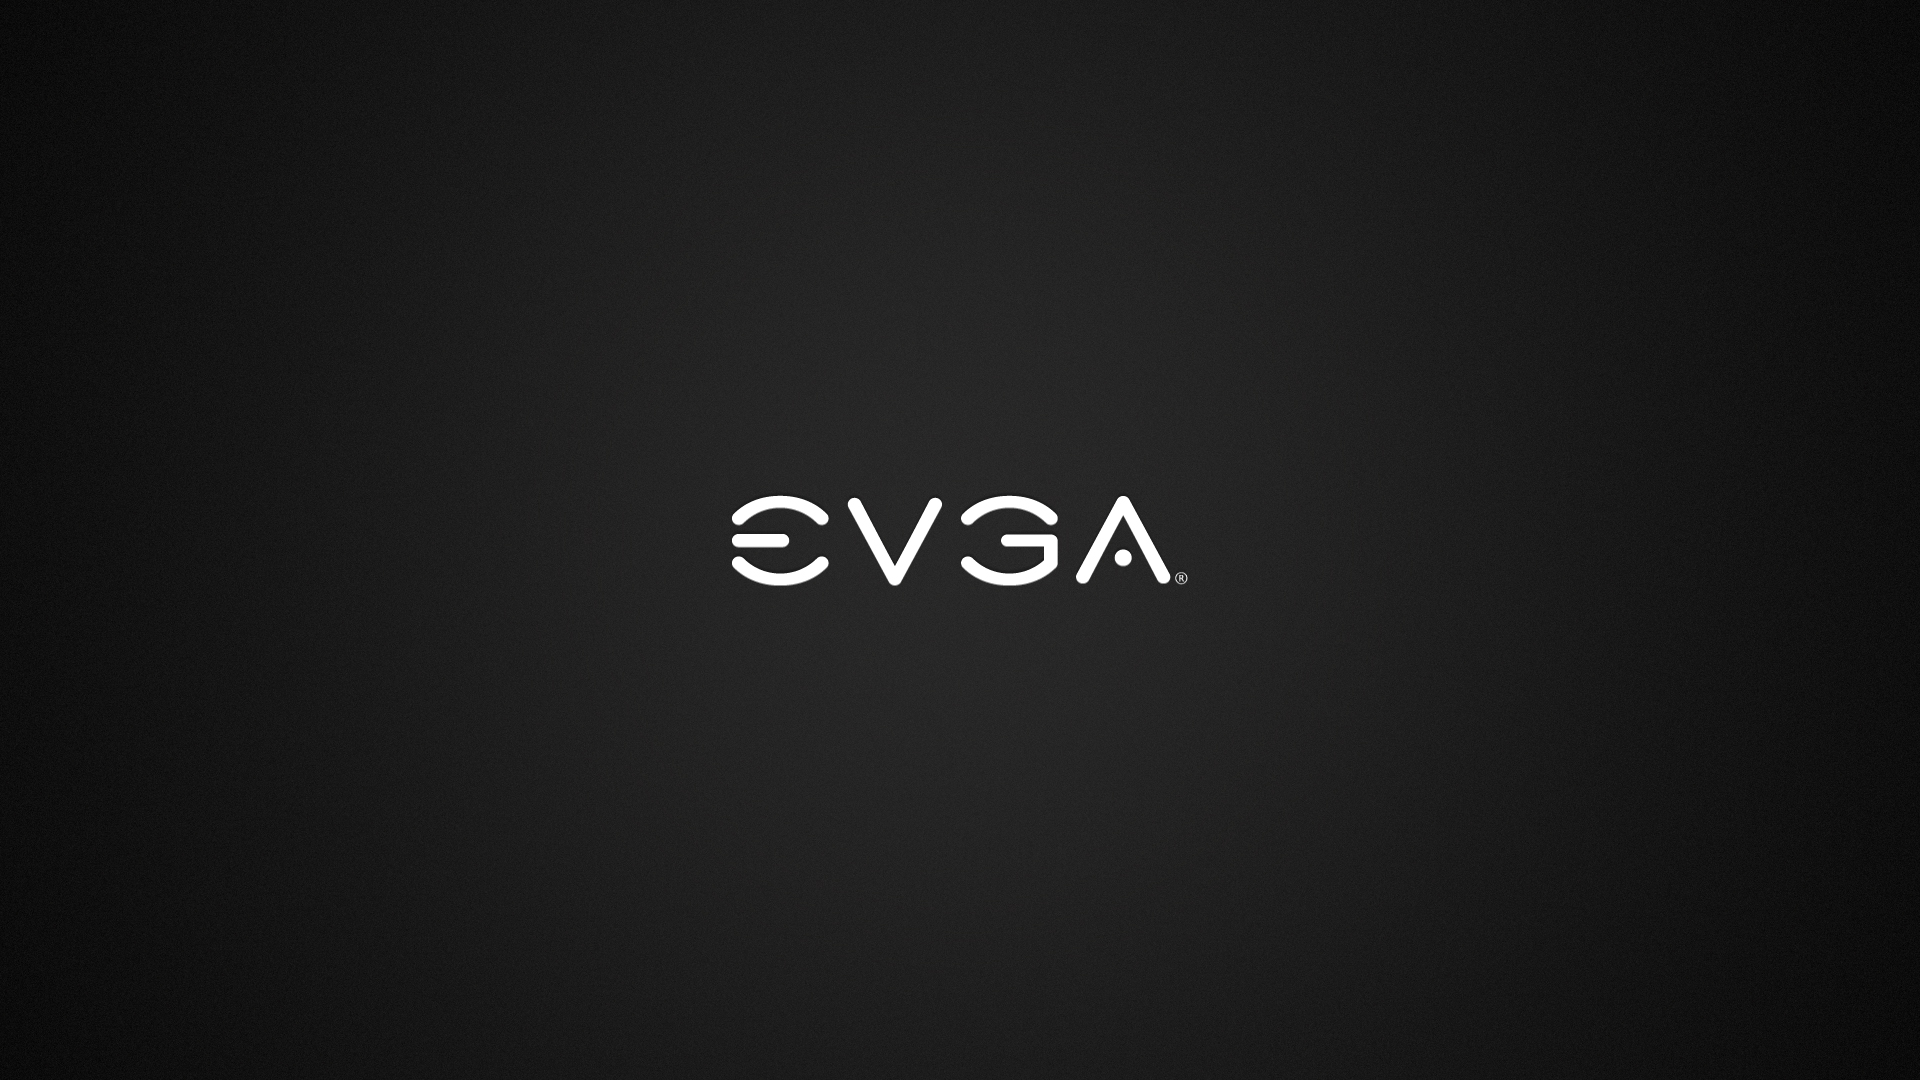 Evga Wallpaper 1080p Dark 1920x